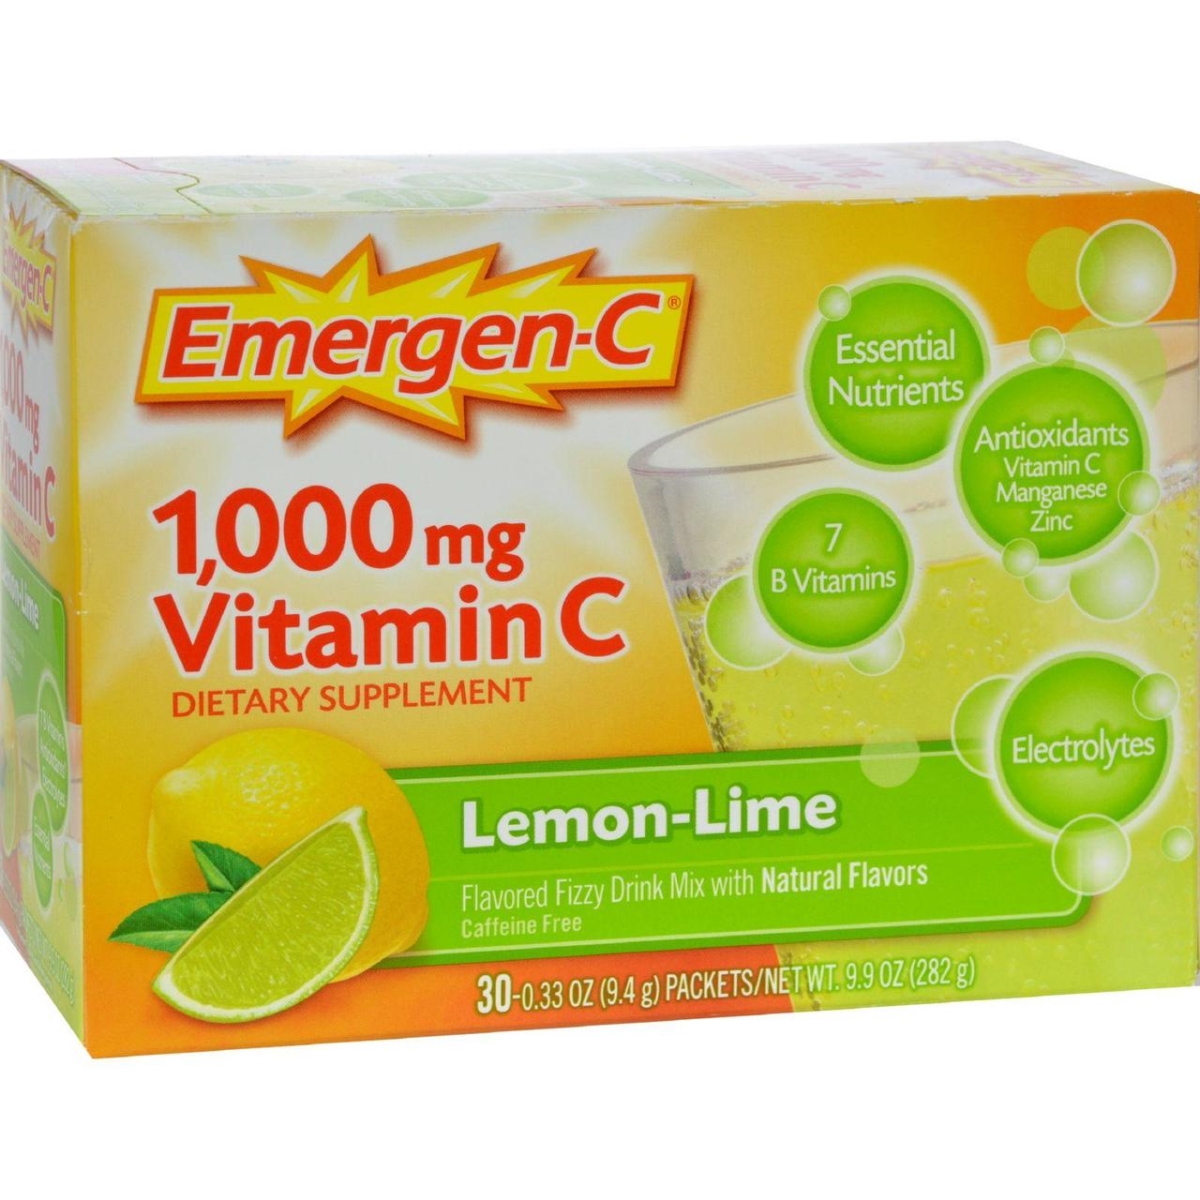 Alacer Hg0351056 1000 Mg Emergen-c Vitamin C Fizzy Drink Mix - Lemon Lime, 30 Packet